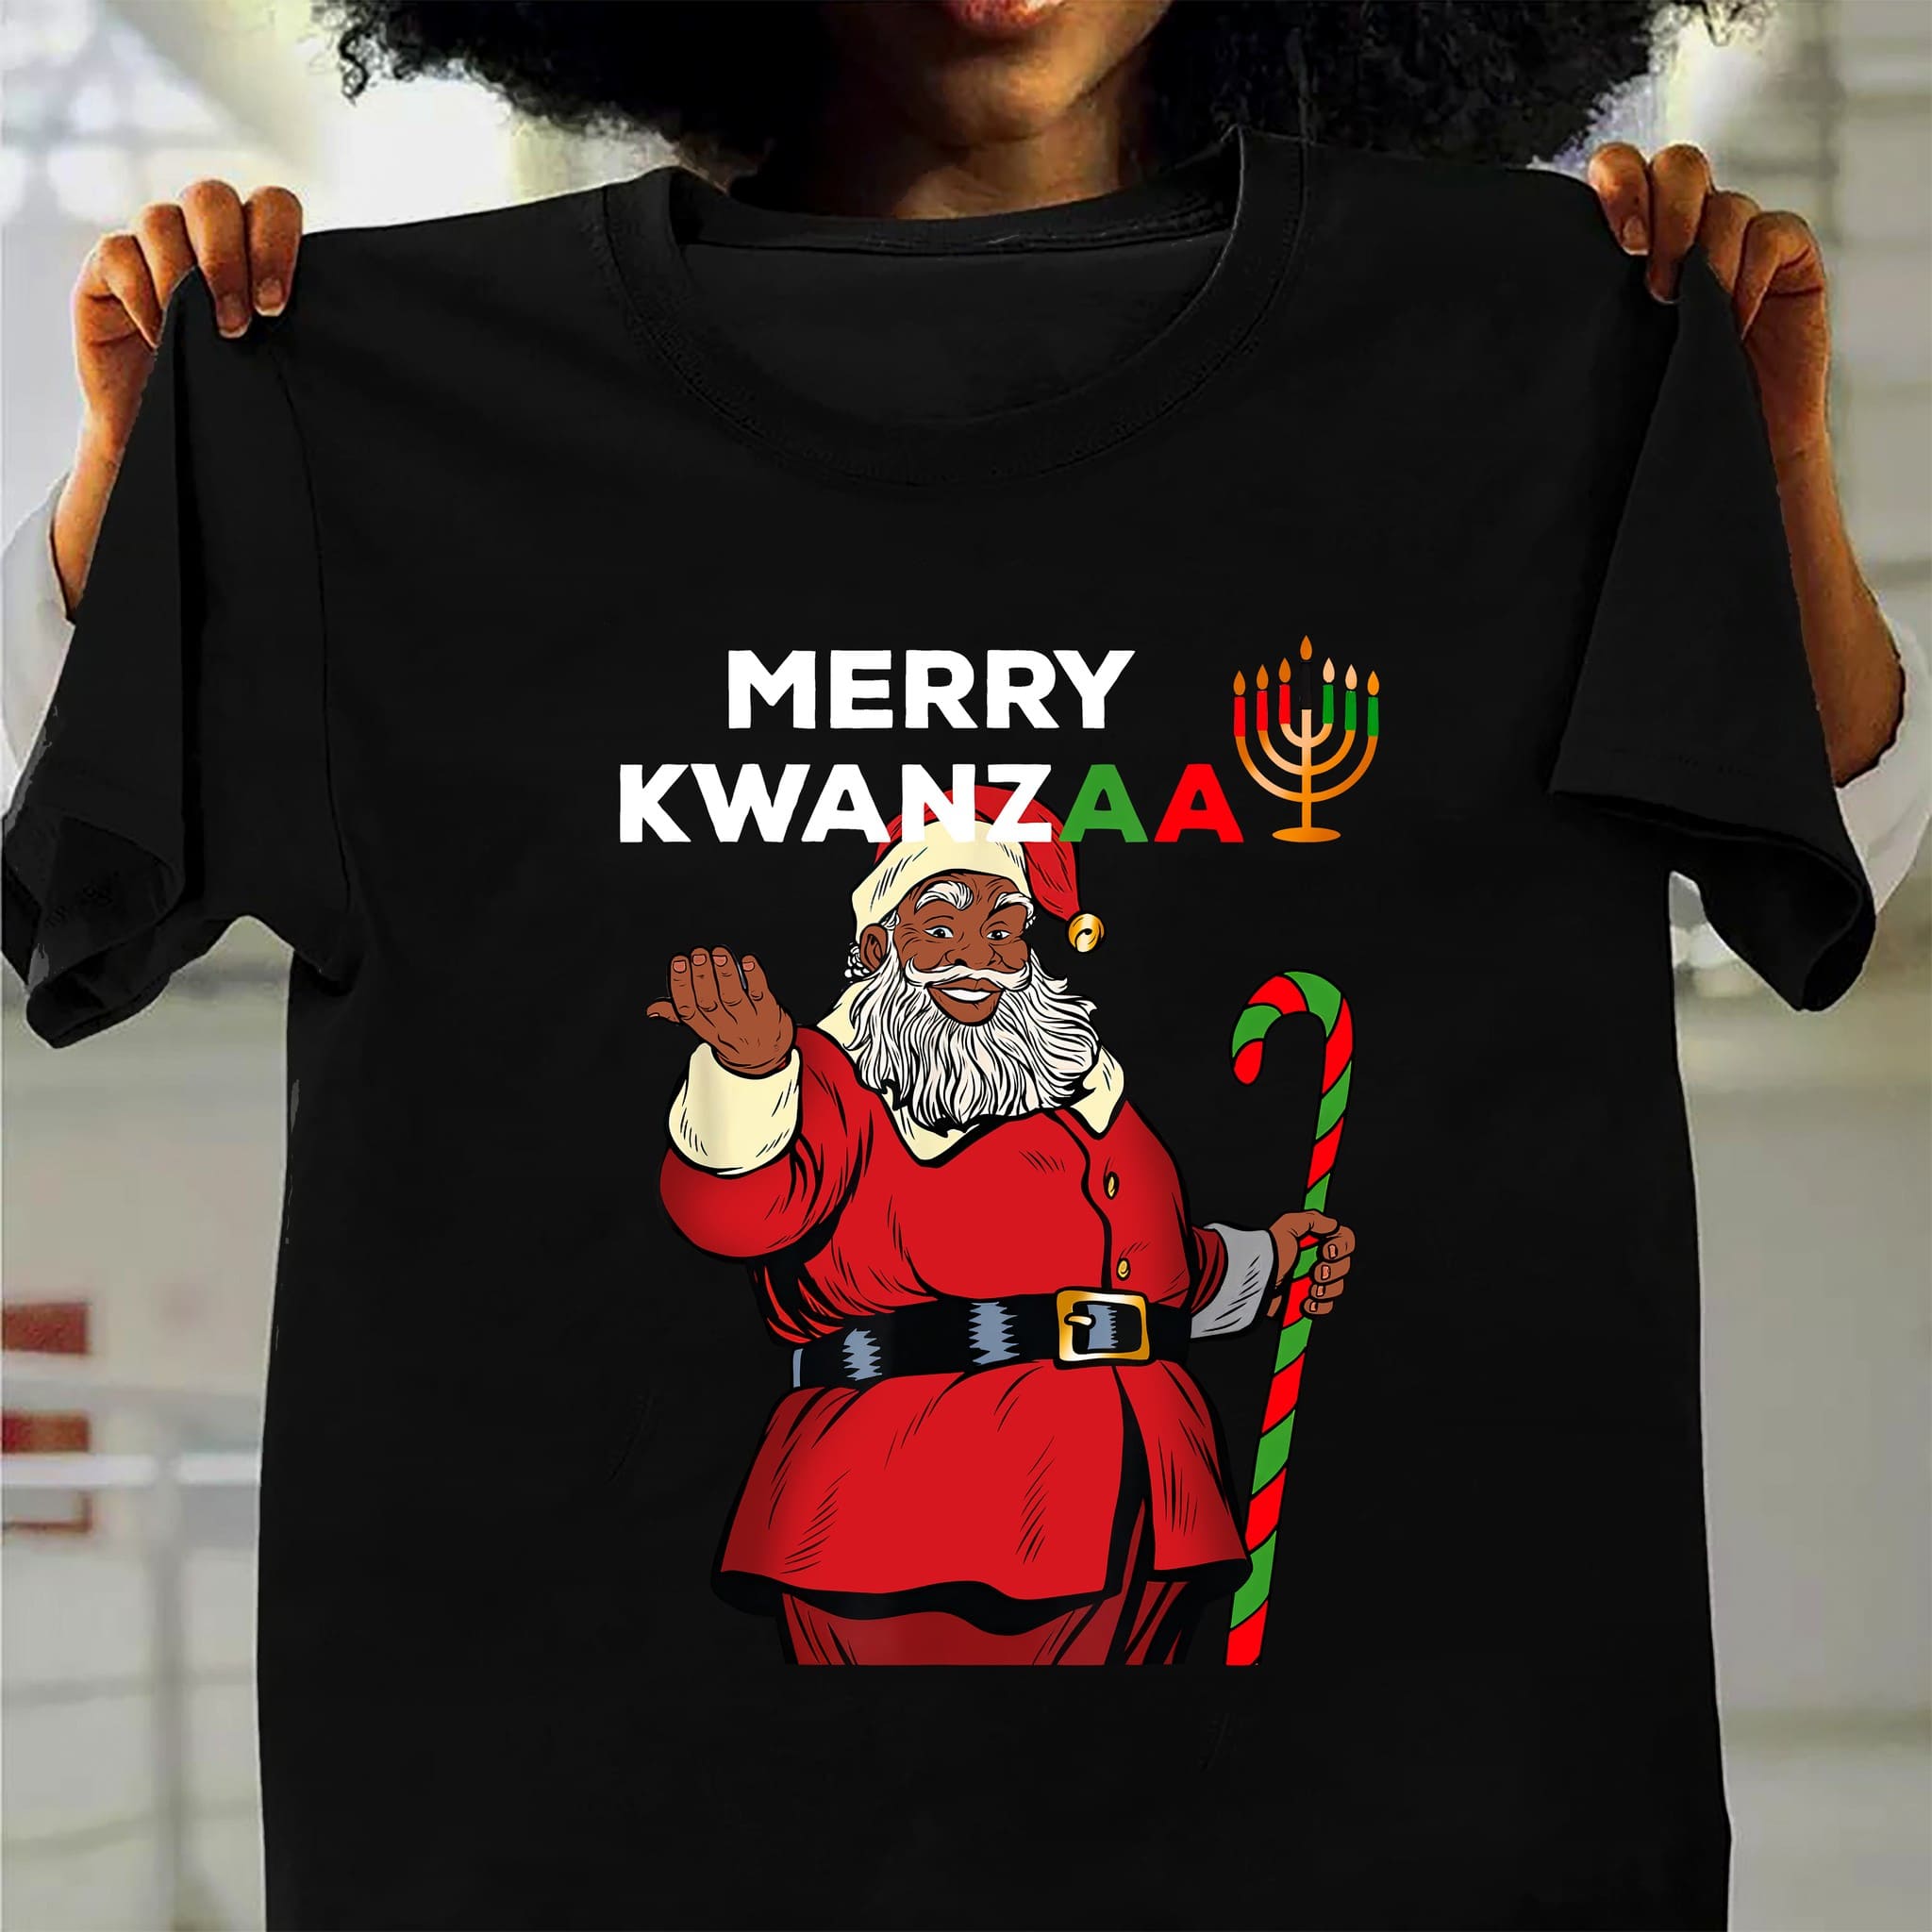 Merry Kwanzaa - Black Santa Claus, Merry Christmas T-shirt